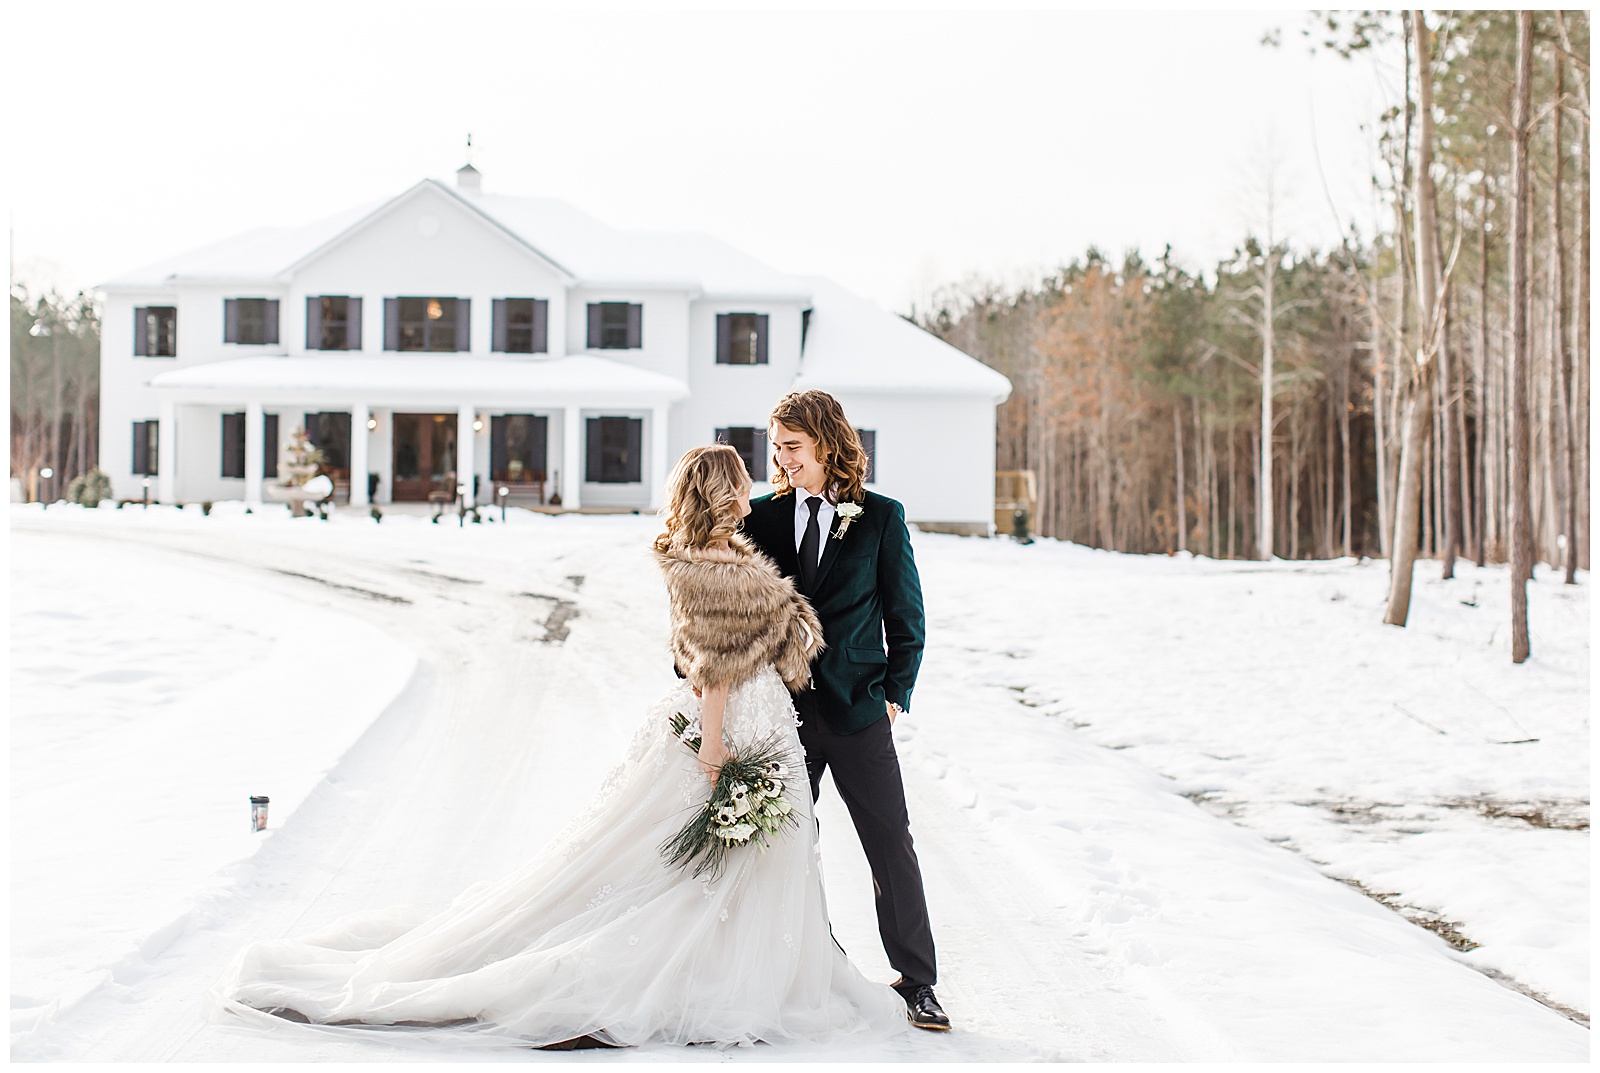 antebellum-of-new-kent-winter-wedding-inspiration-ch-sh-fredericks-photography_0023.jpg